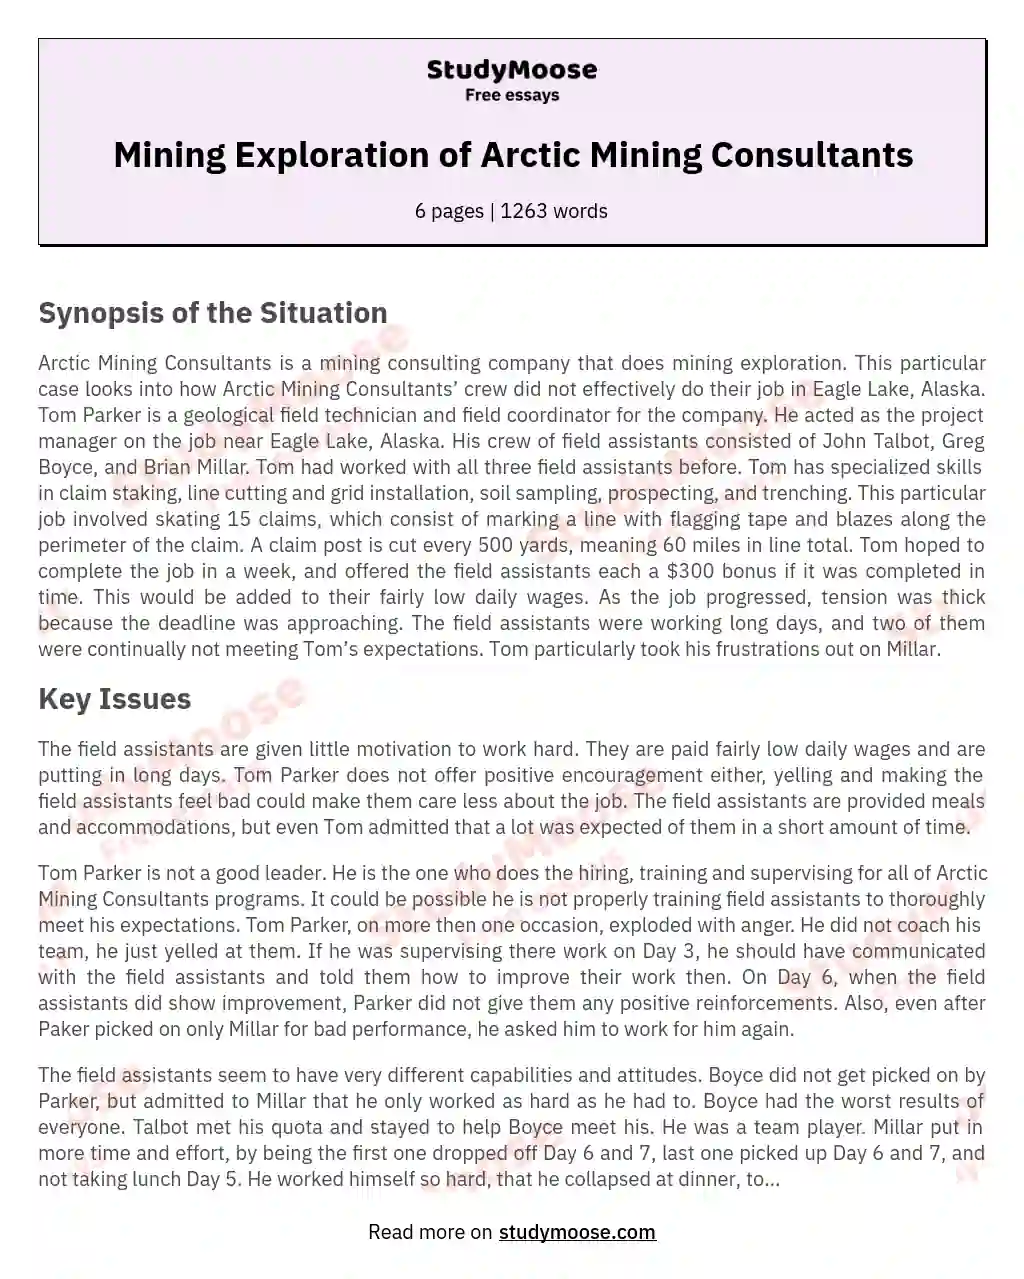 Mining Exploration of Arctic Mining Consultants